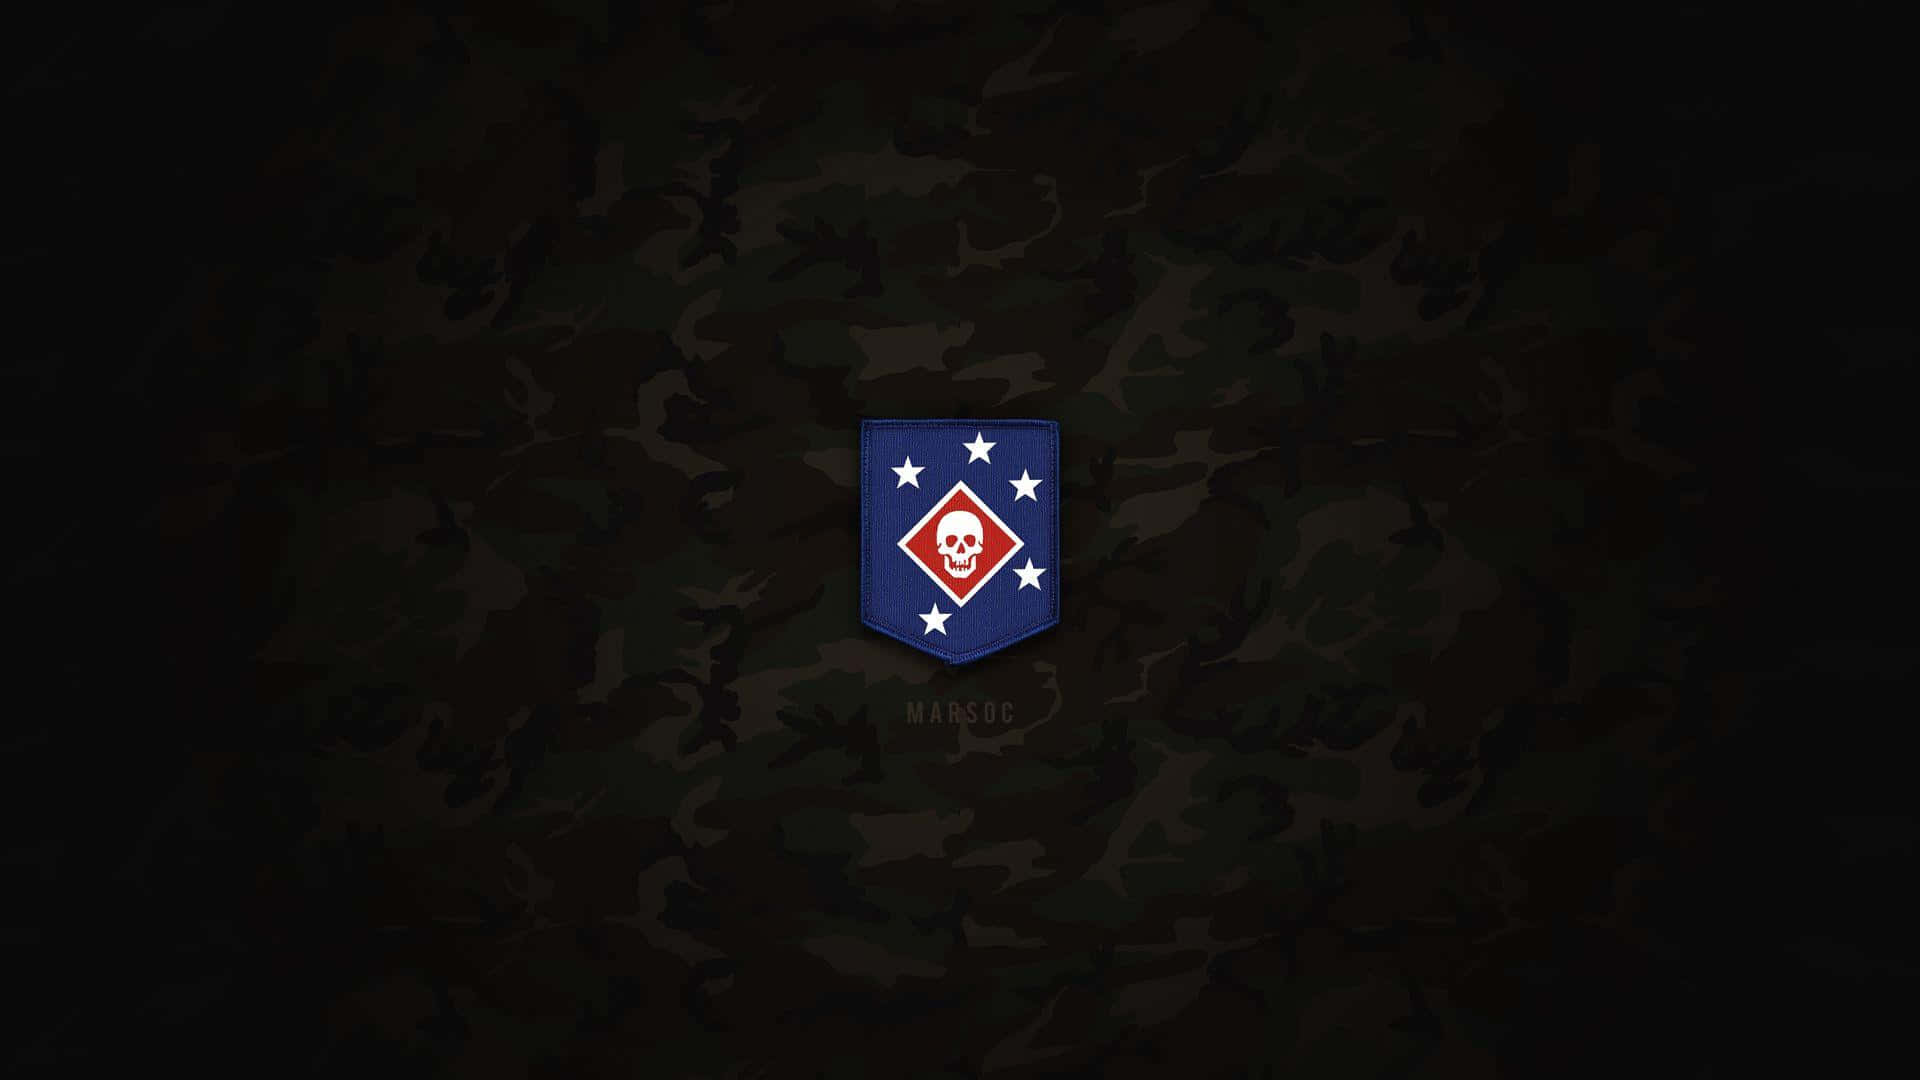 Enkamouflaget Bakgrund Med En Militär Emblem Wallpaper